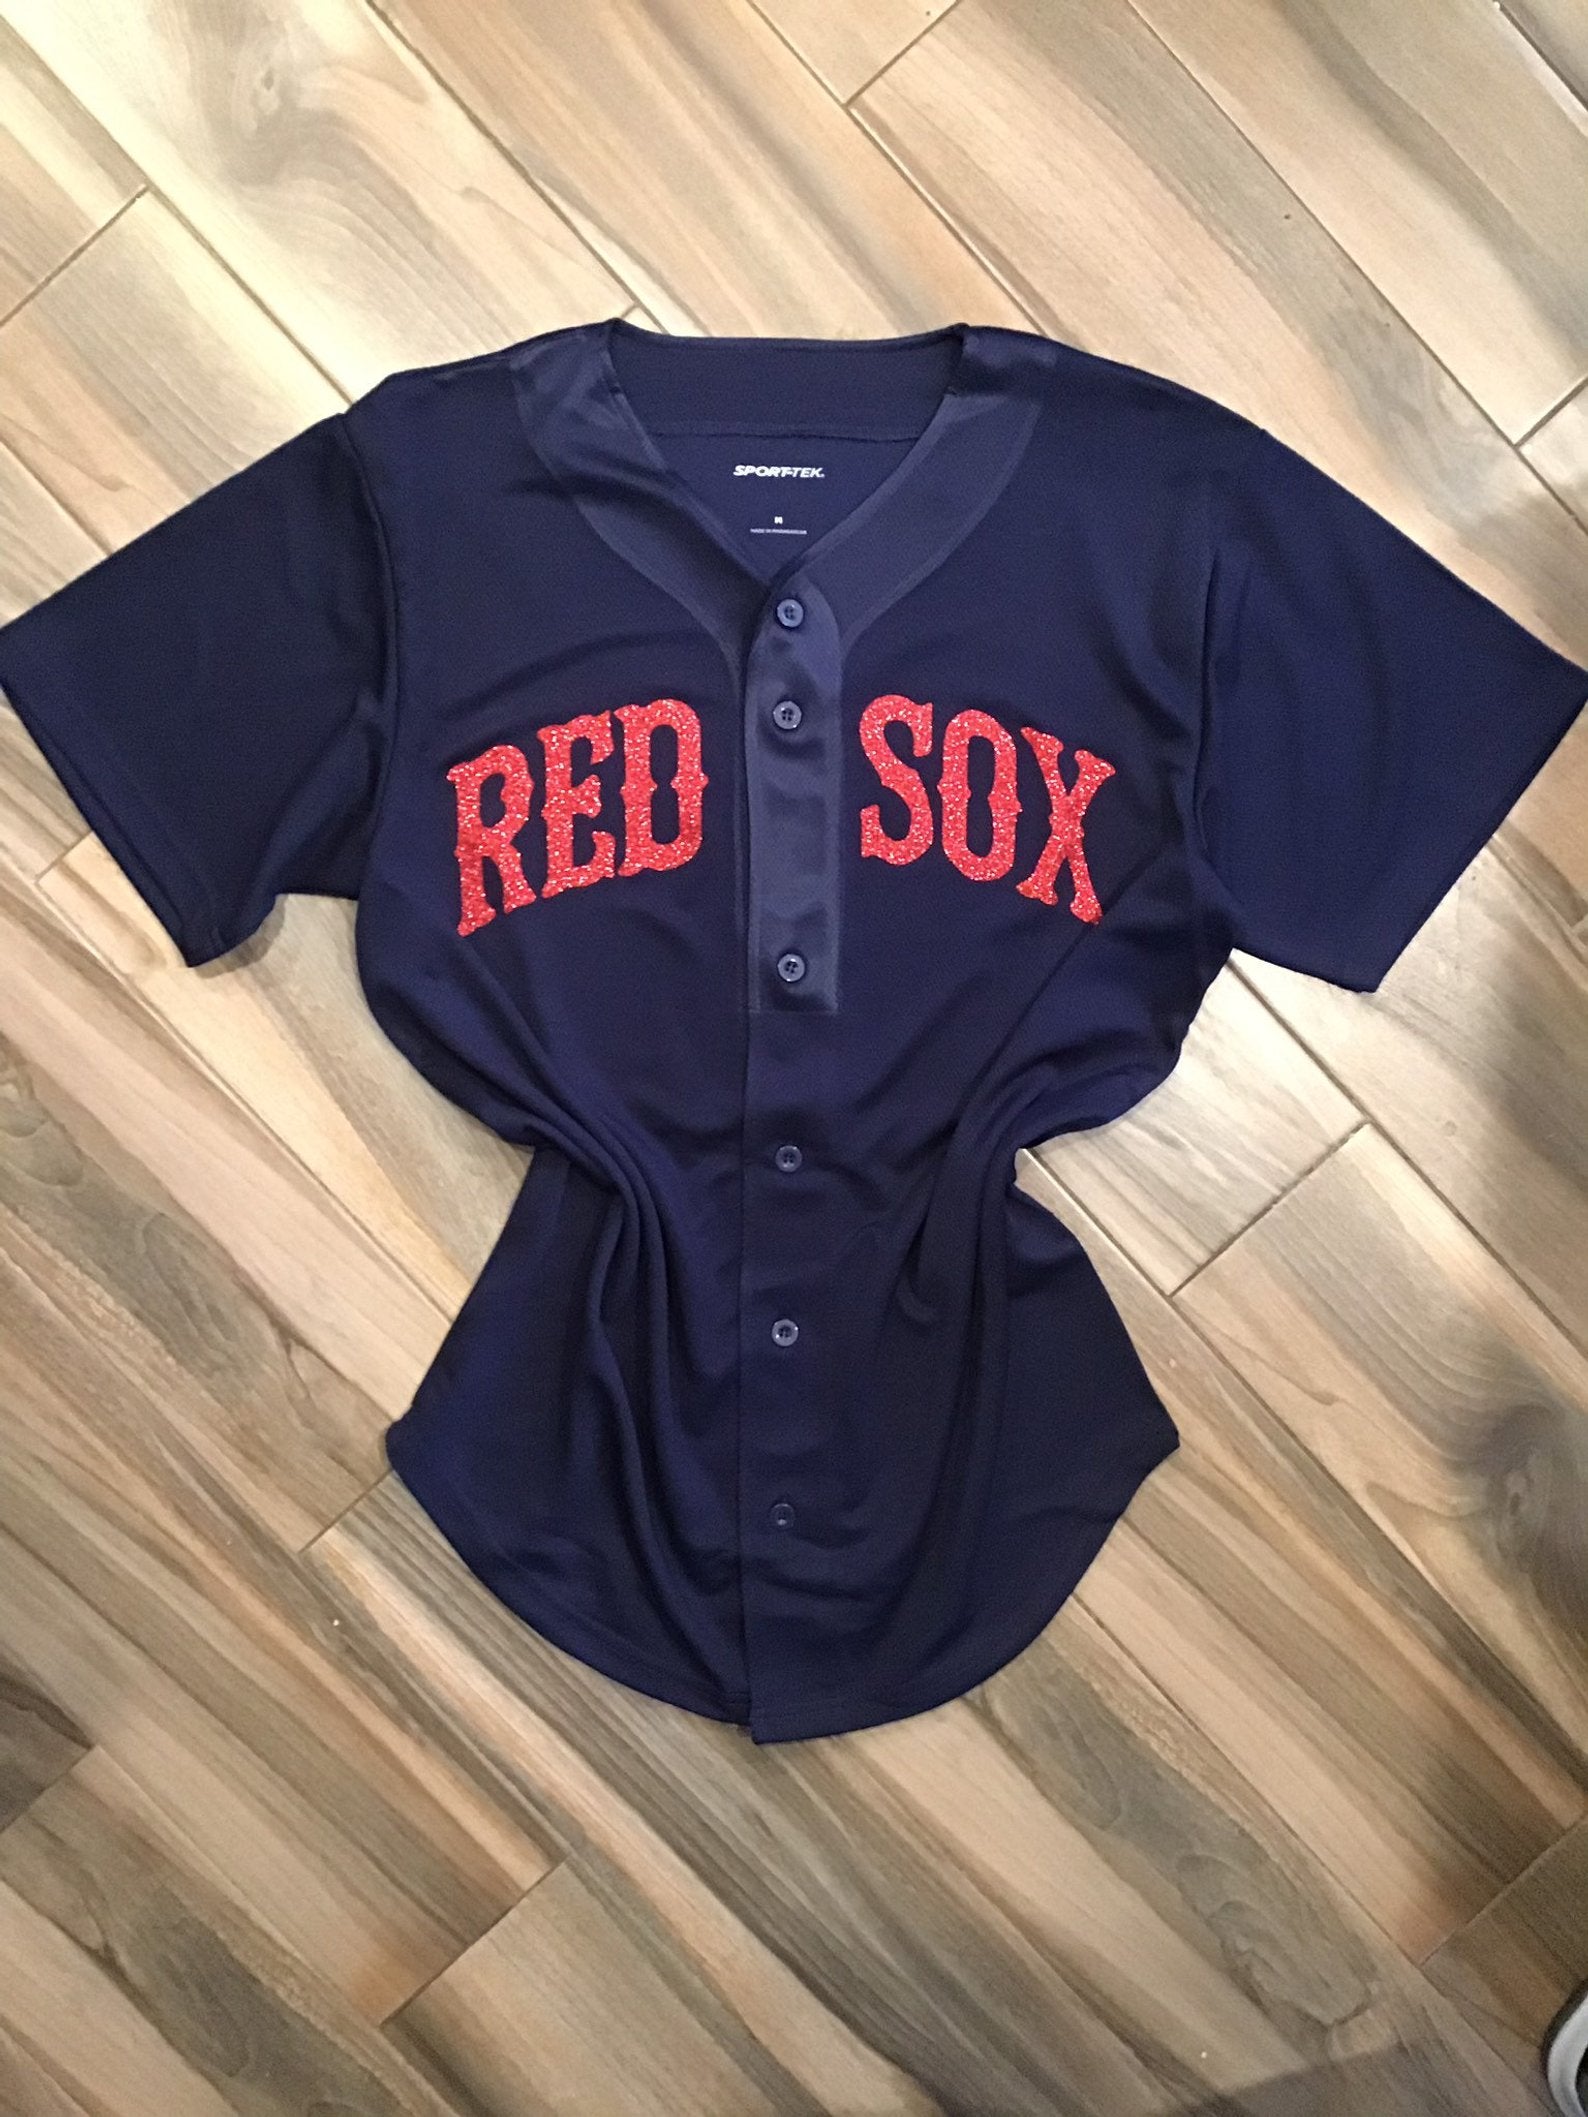  Majestic Custom (Any Name/# on Back) Boston Red Sox